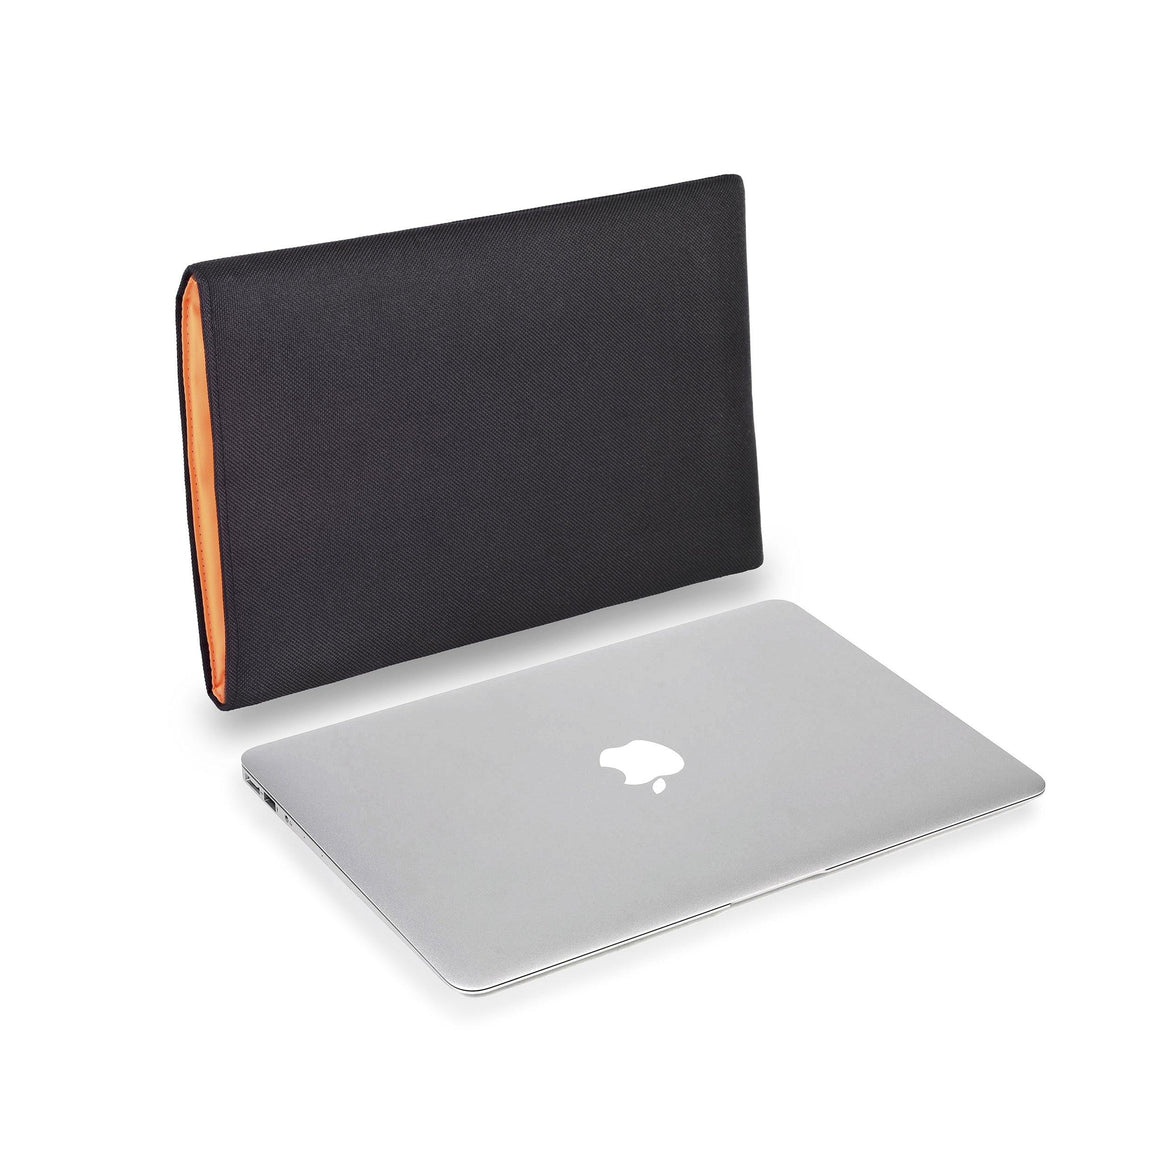 MacBook Cordura Black - Wrappers UK